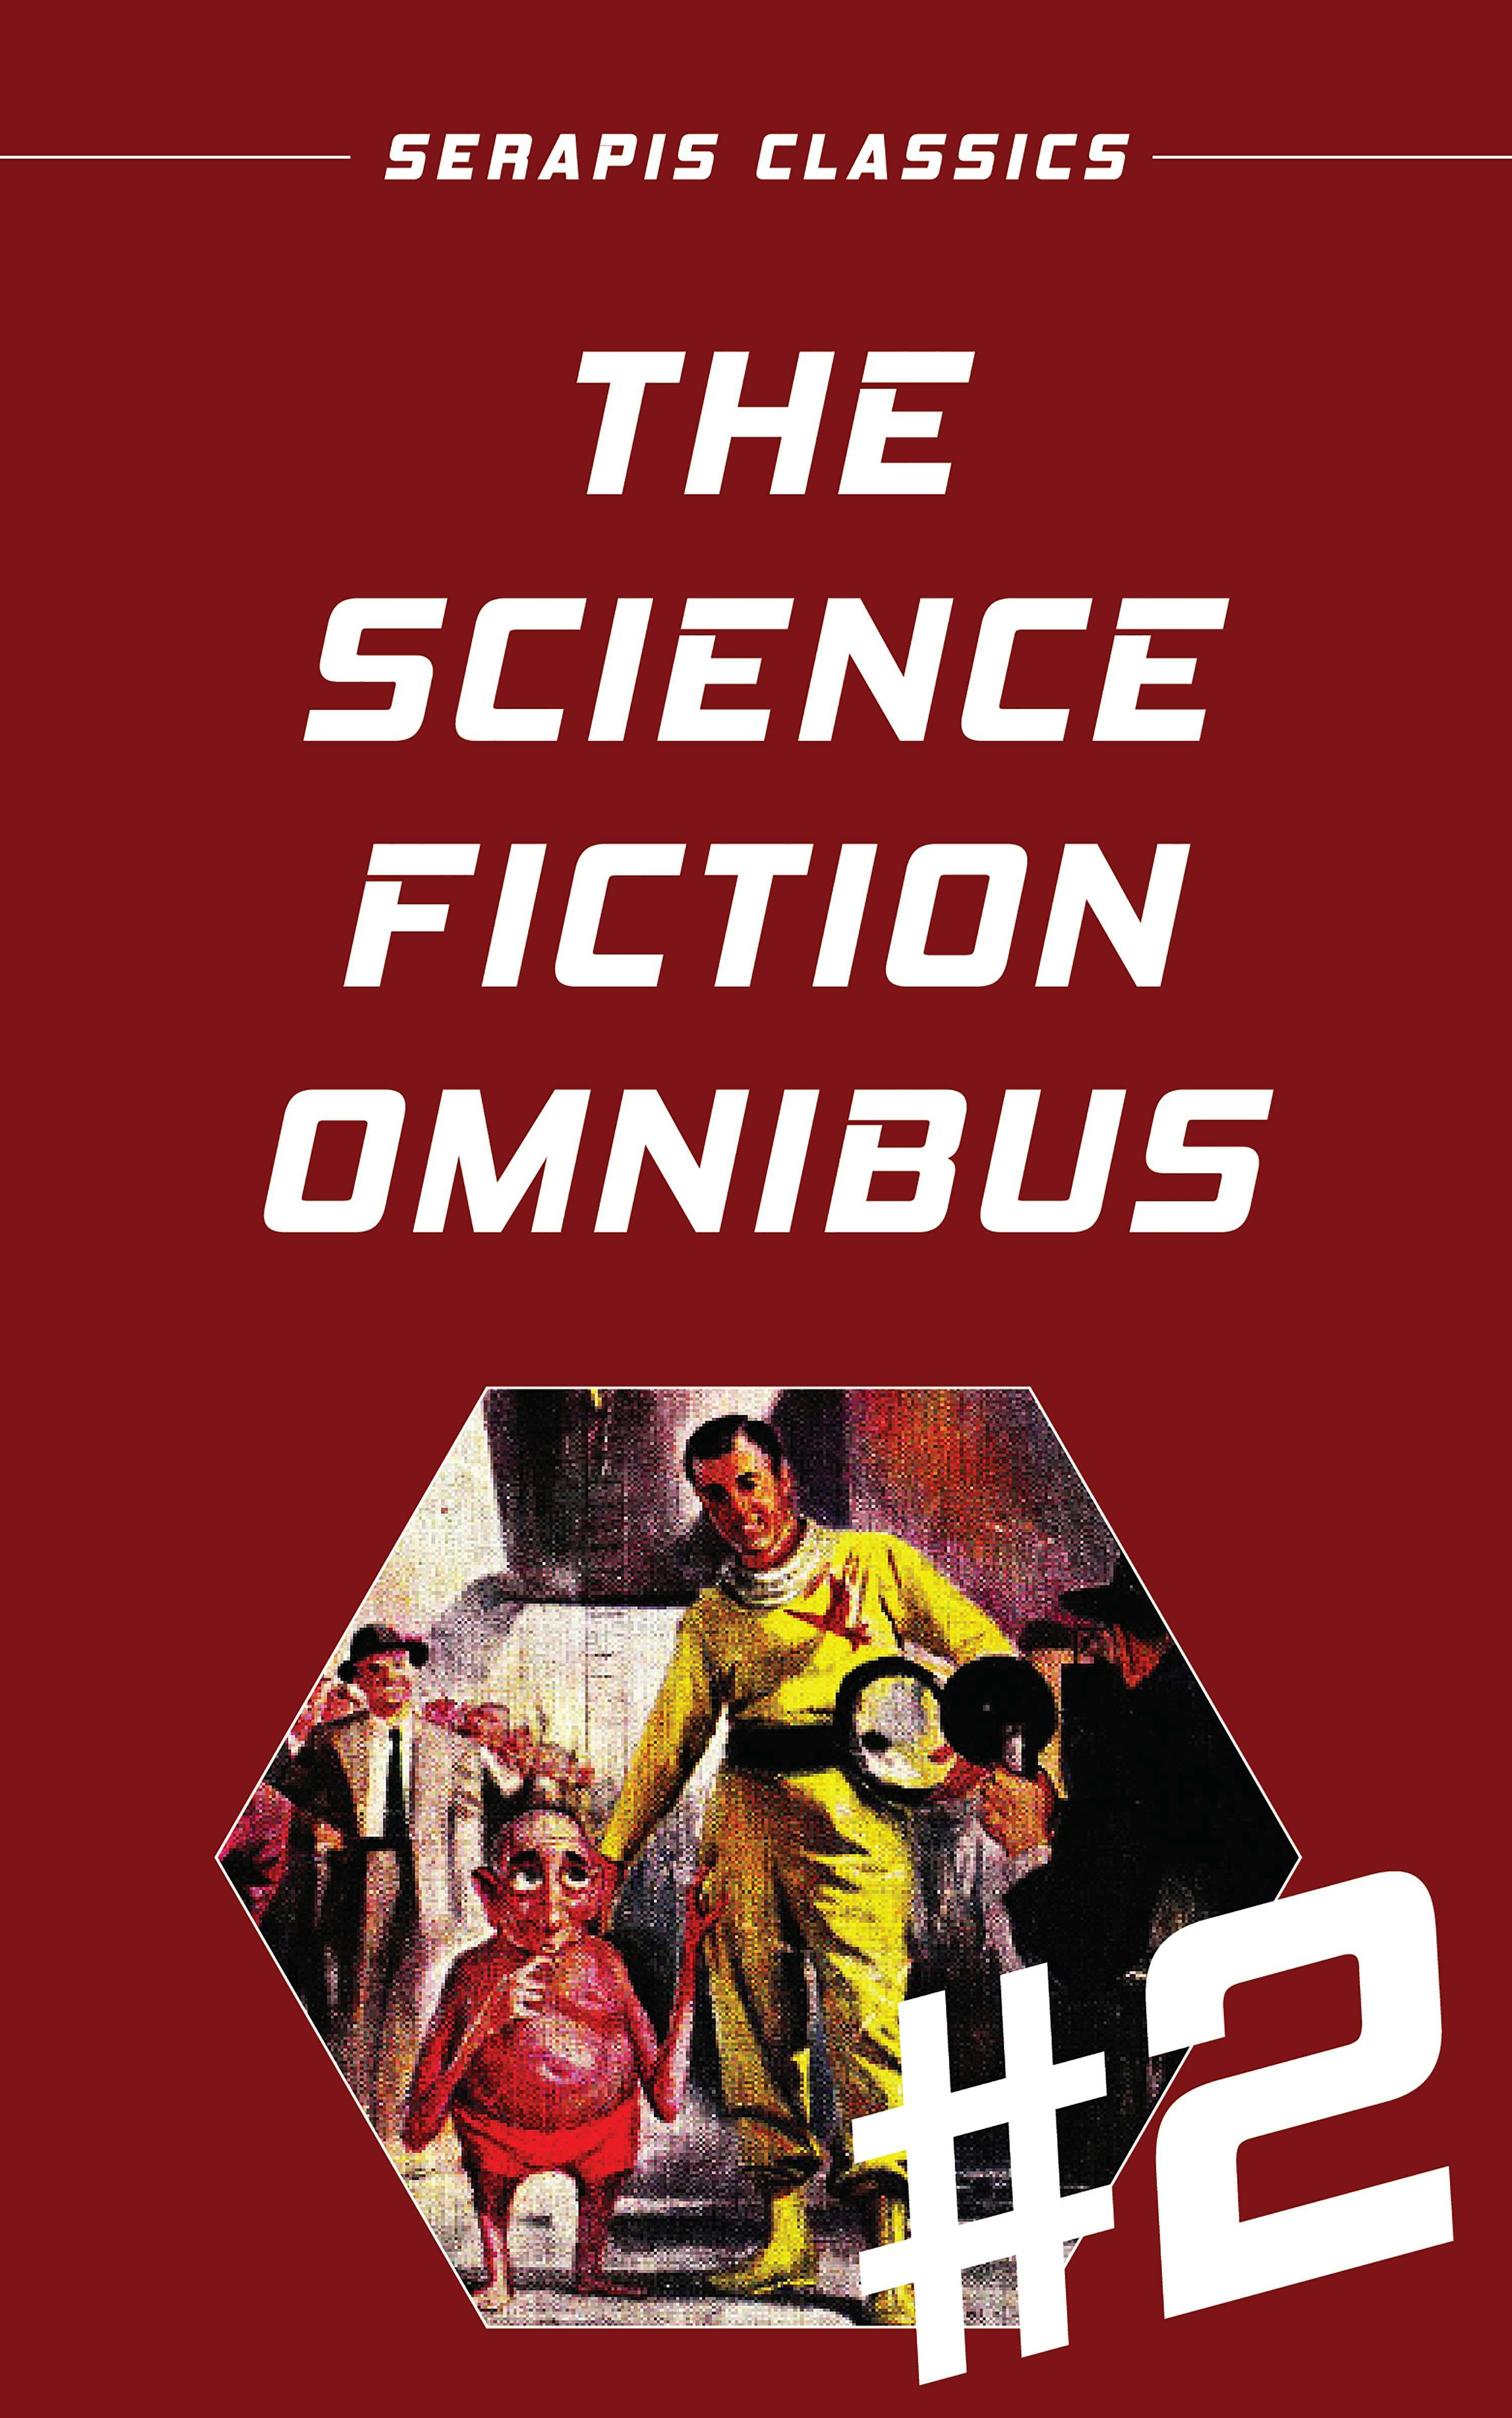 The Science Fiction Omnibus #2 (Serapis Classics) - undefined